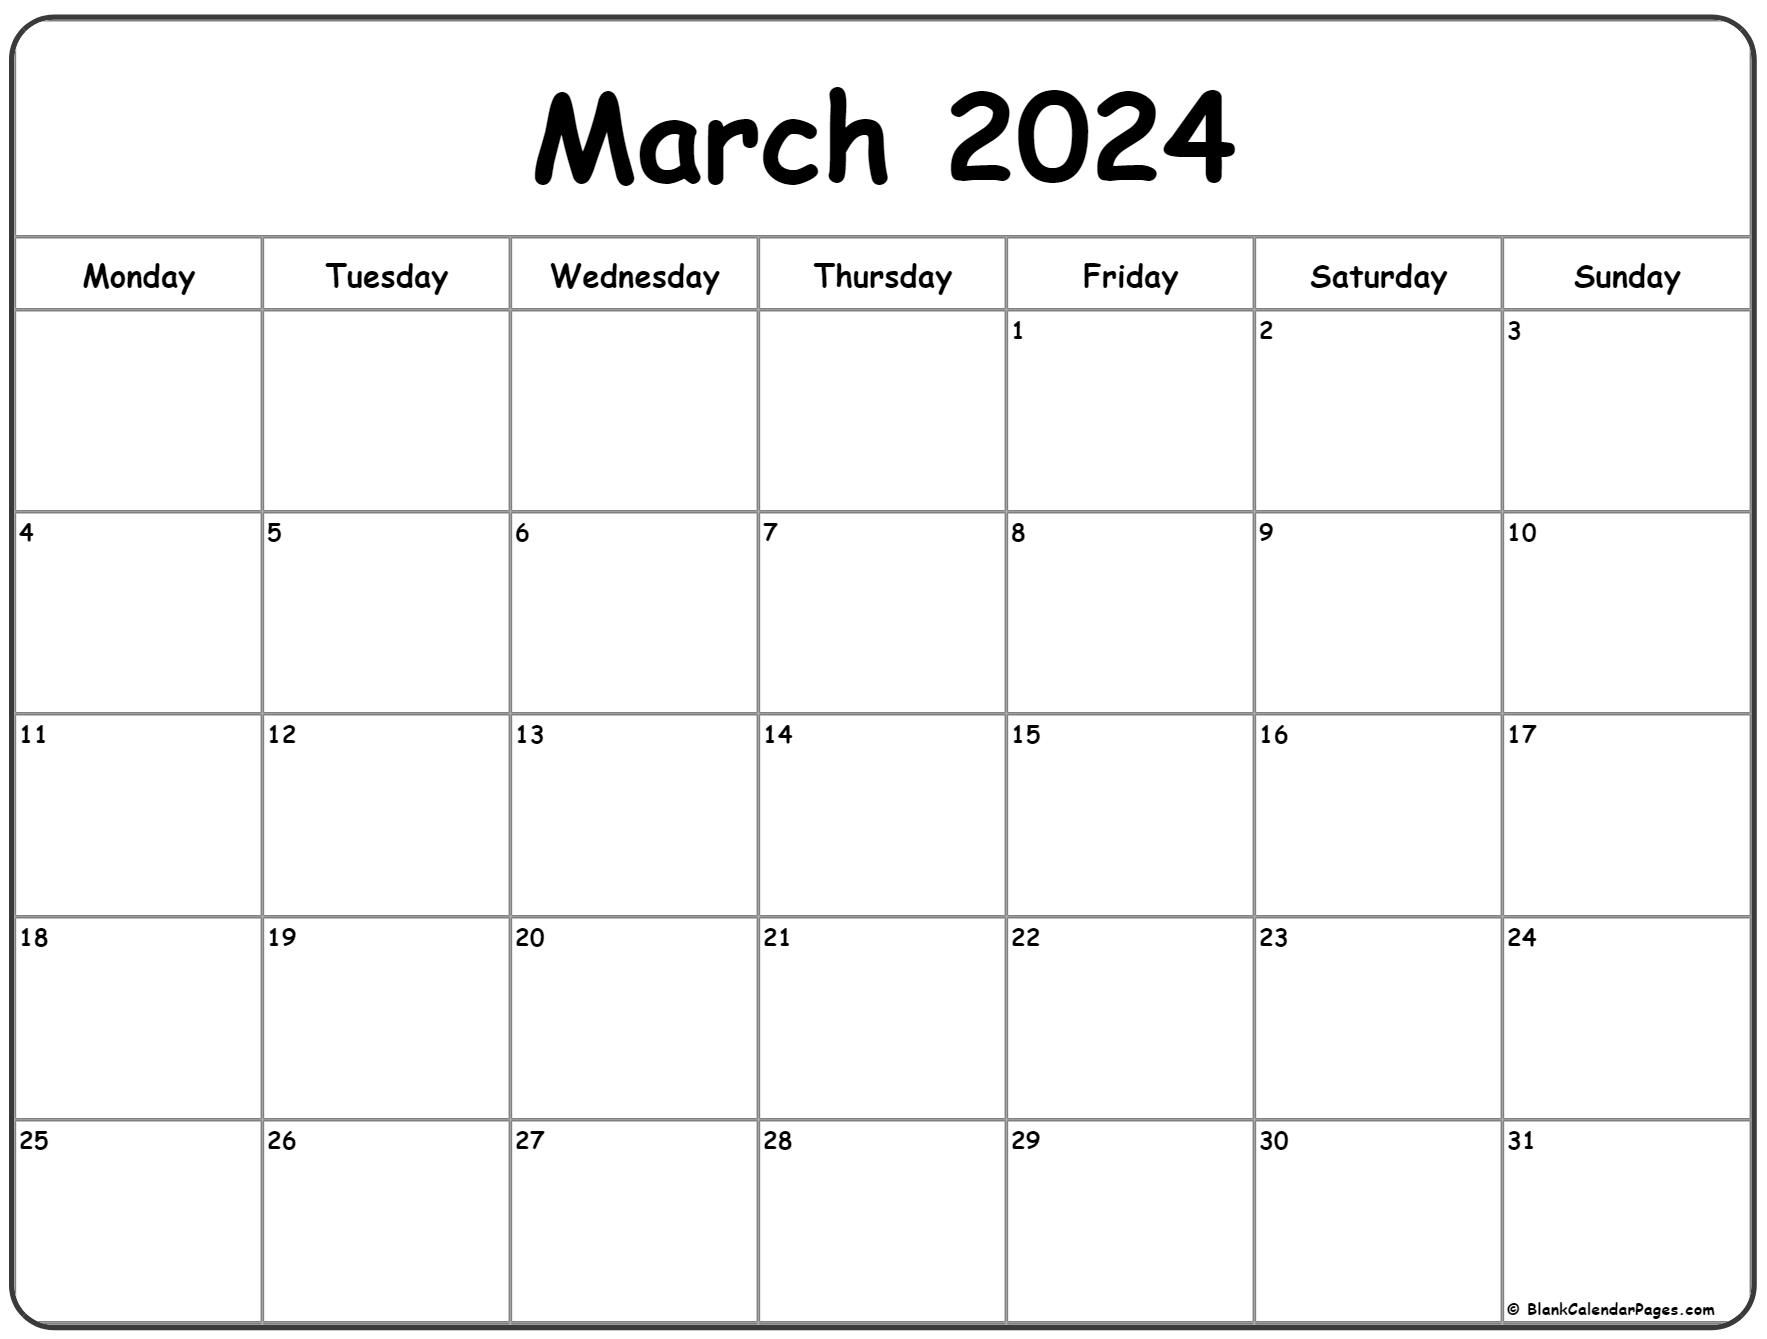 March 2024 Monday Calendar | Monday To Sunday for 2024 March Calendar Printable